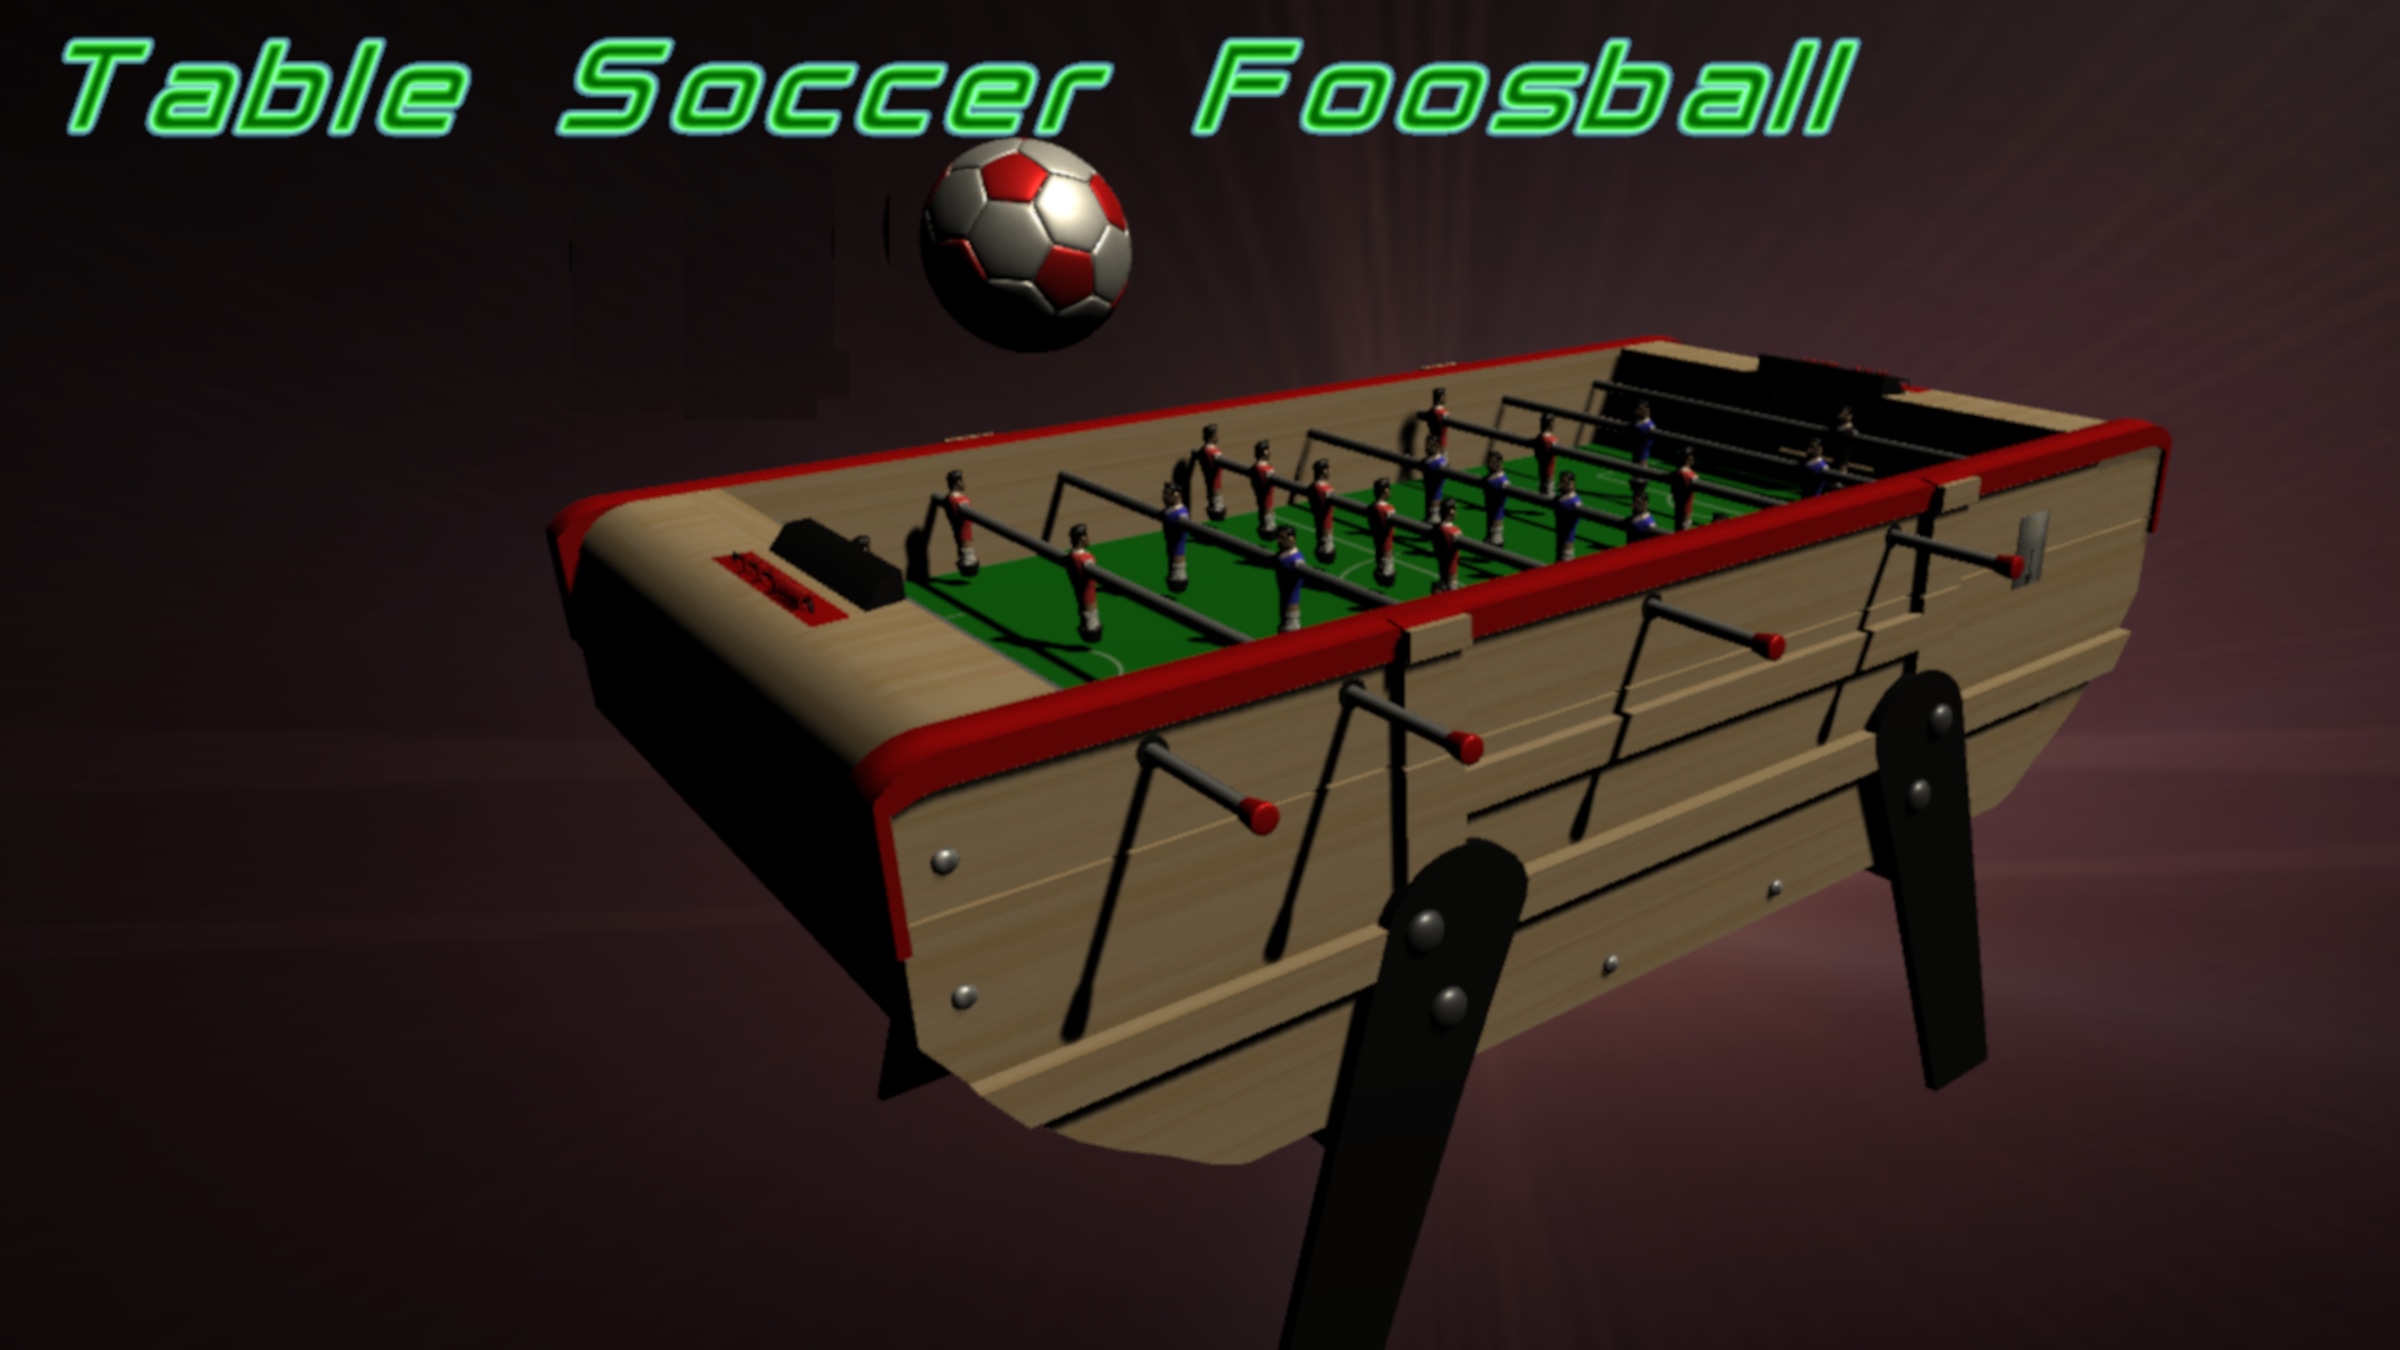 tanker Arabic setup Table Soccer Foosball for Nintendo Switch - Nintendo Official Site